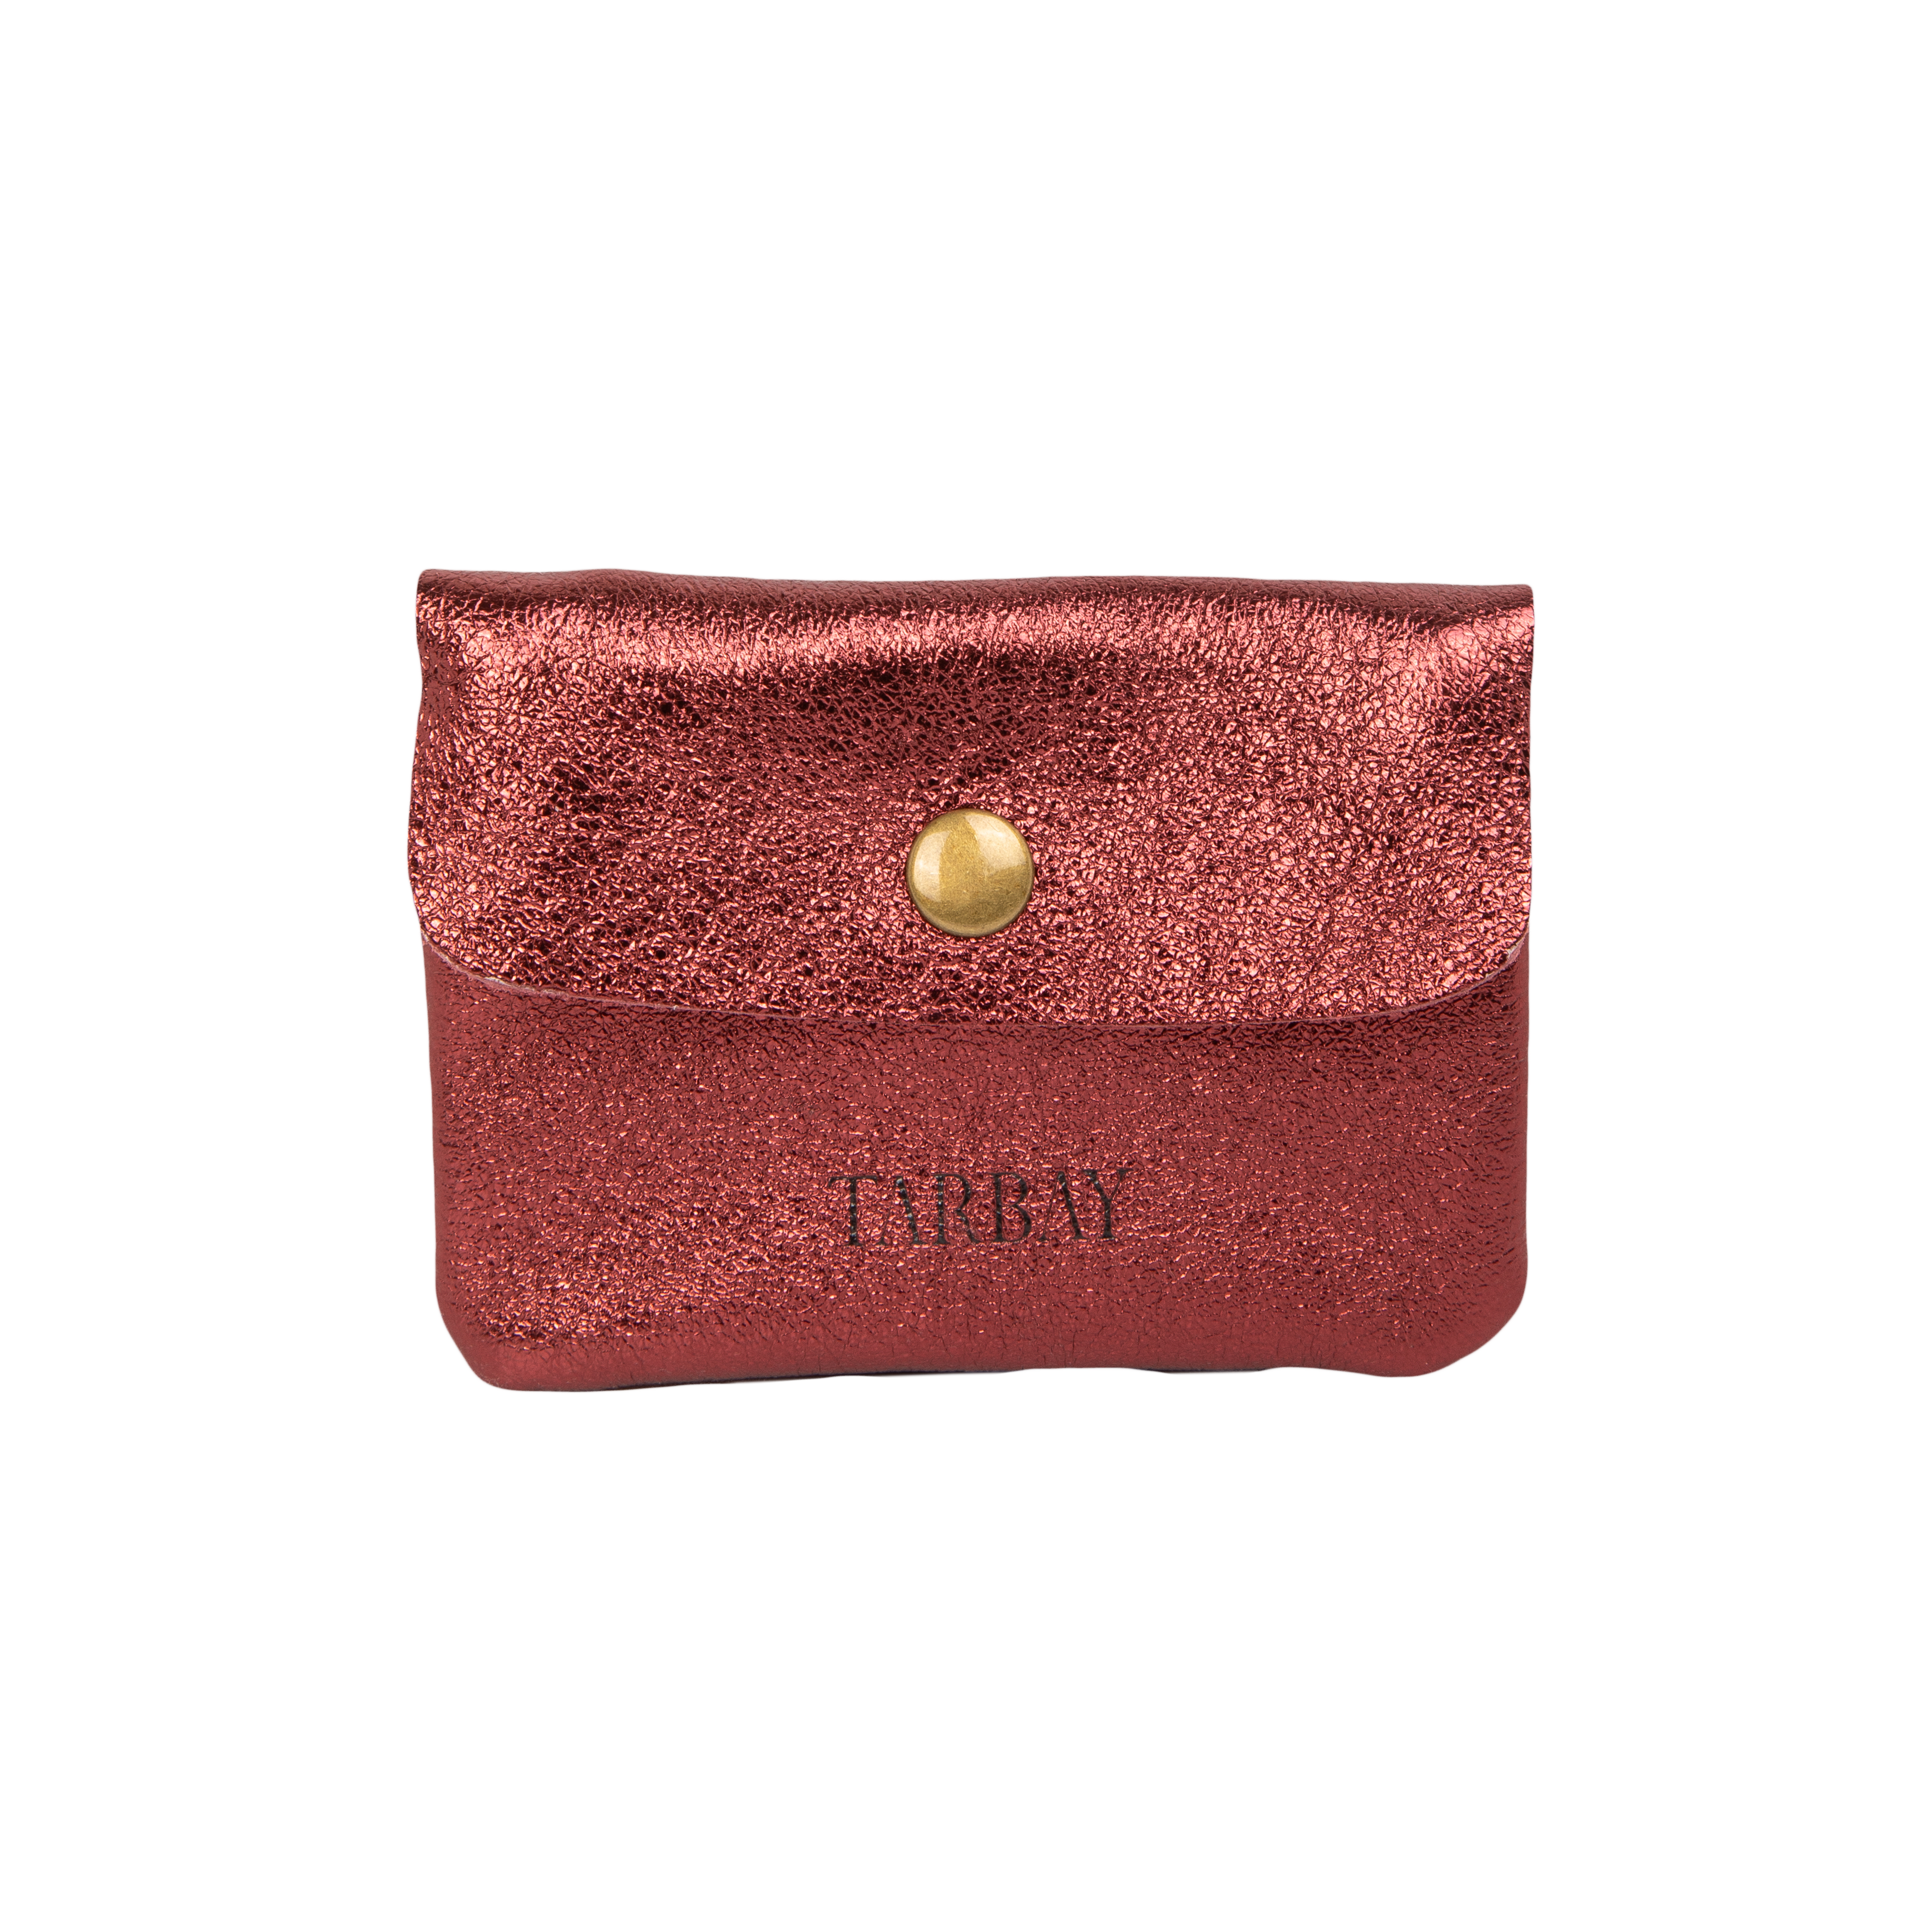 Blair Genuine Leather Wallet #1 - Metallic Red Wallets TARBAY   